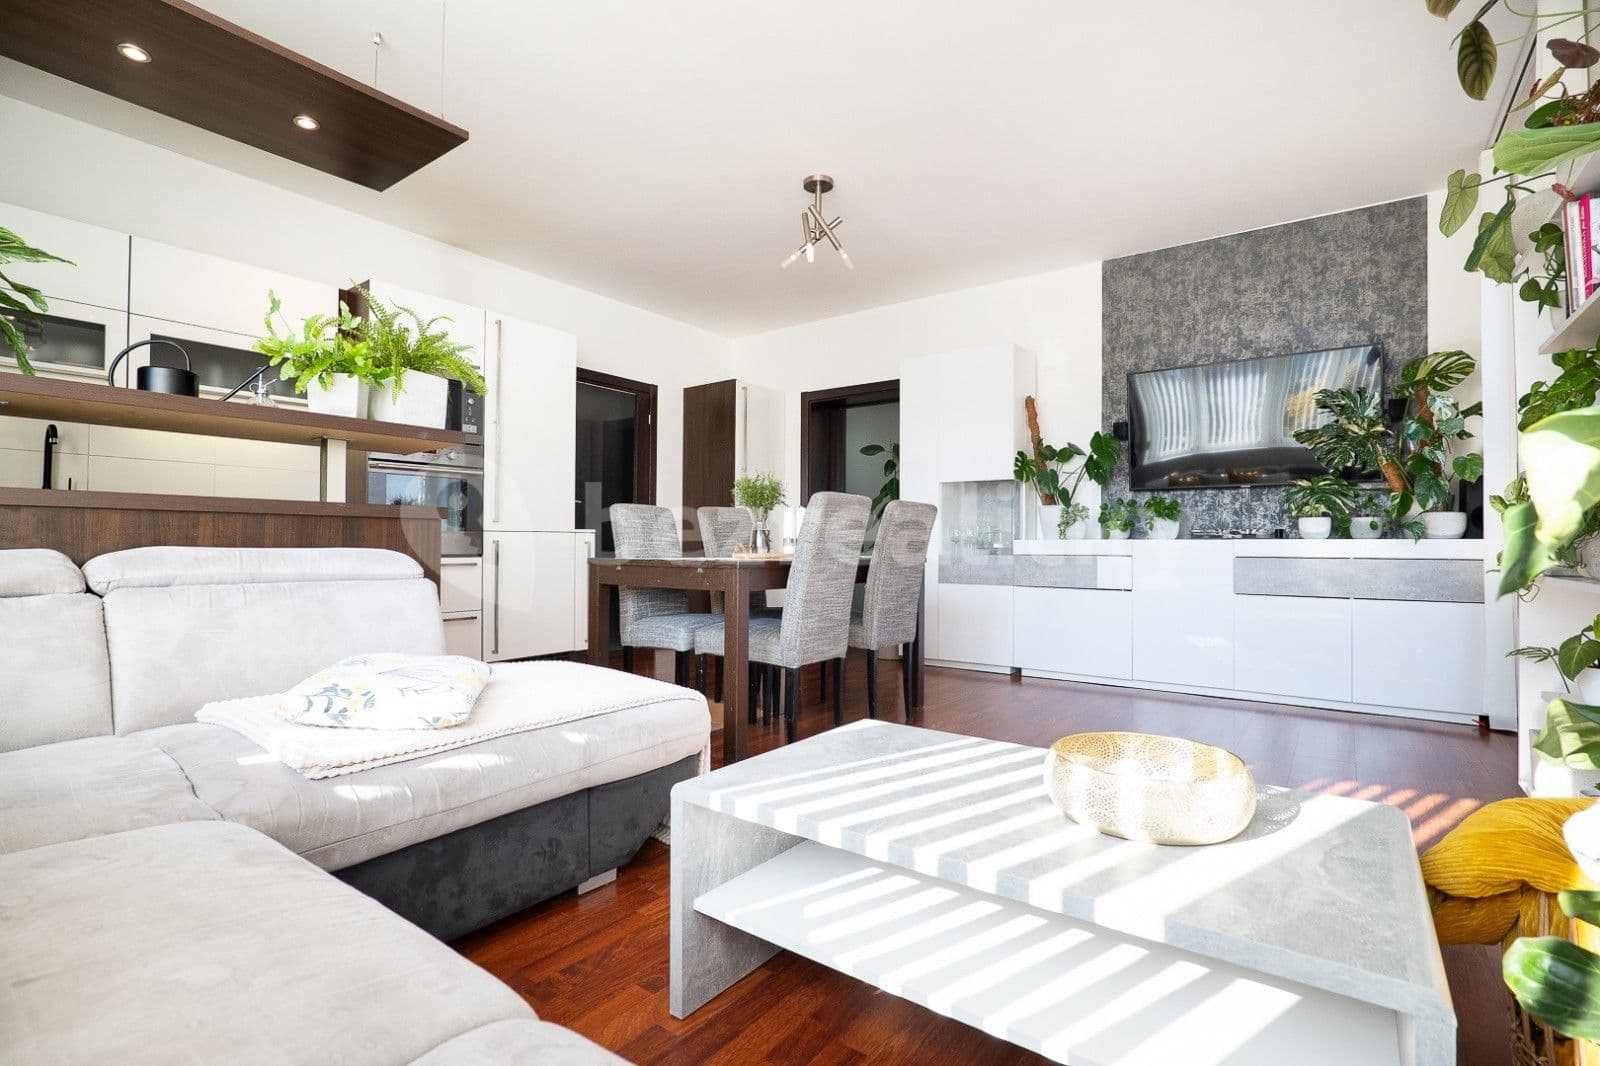 2 bedroom with open-plan kitchen flat for sale, 74 m², Domanovická, Prague, Prague